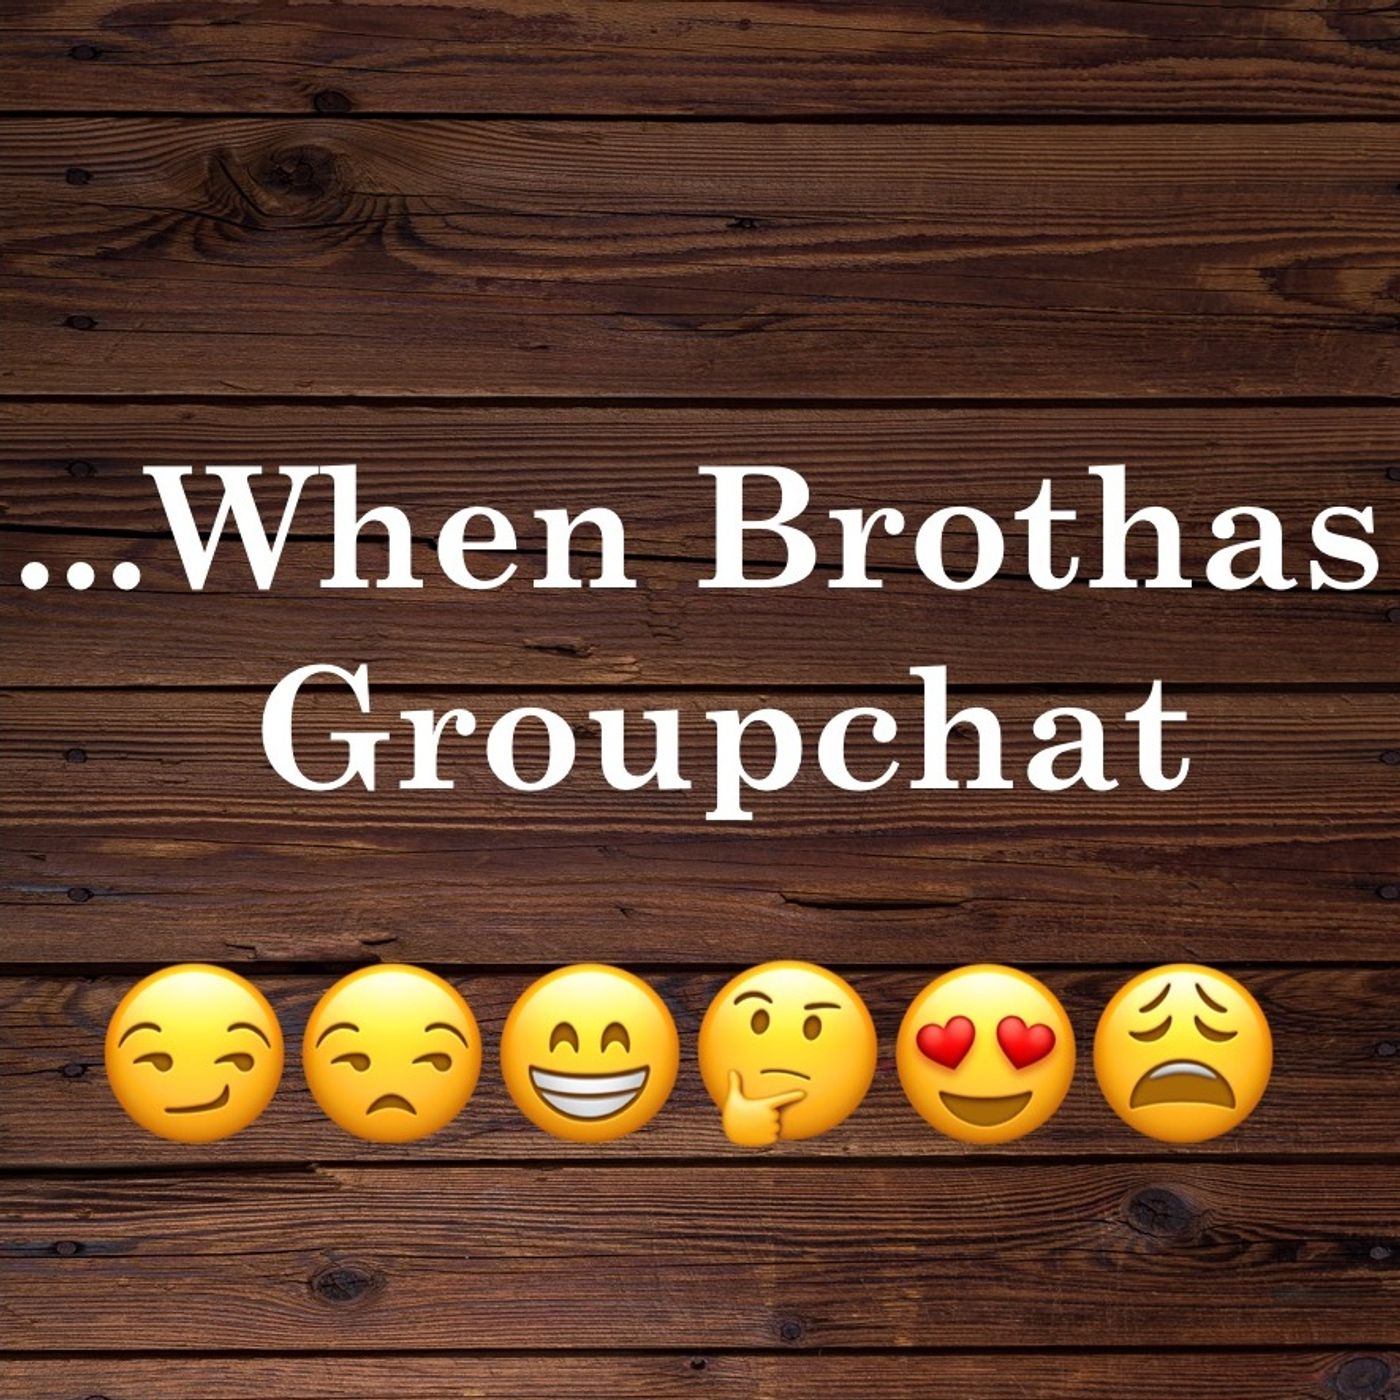 ...When Brothas Groupchat